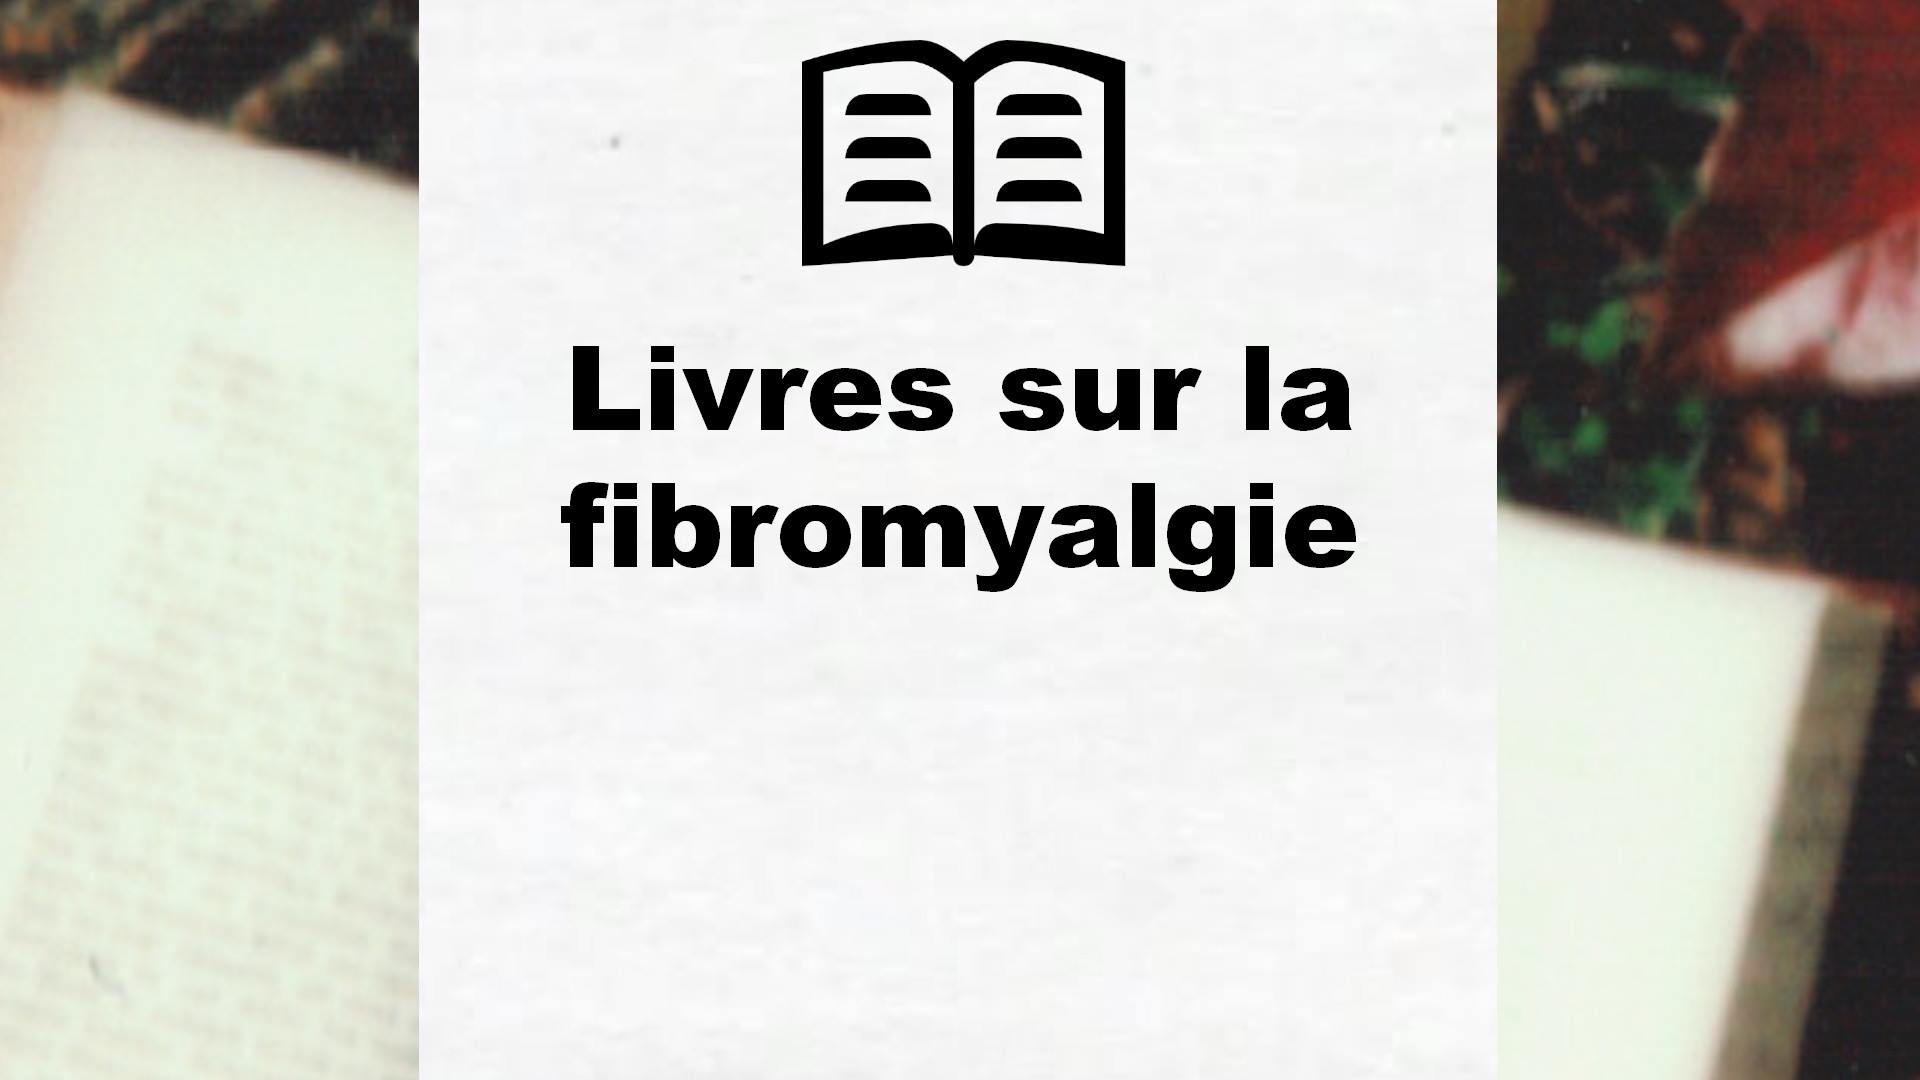 Livres sur la fibromyalgie